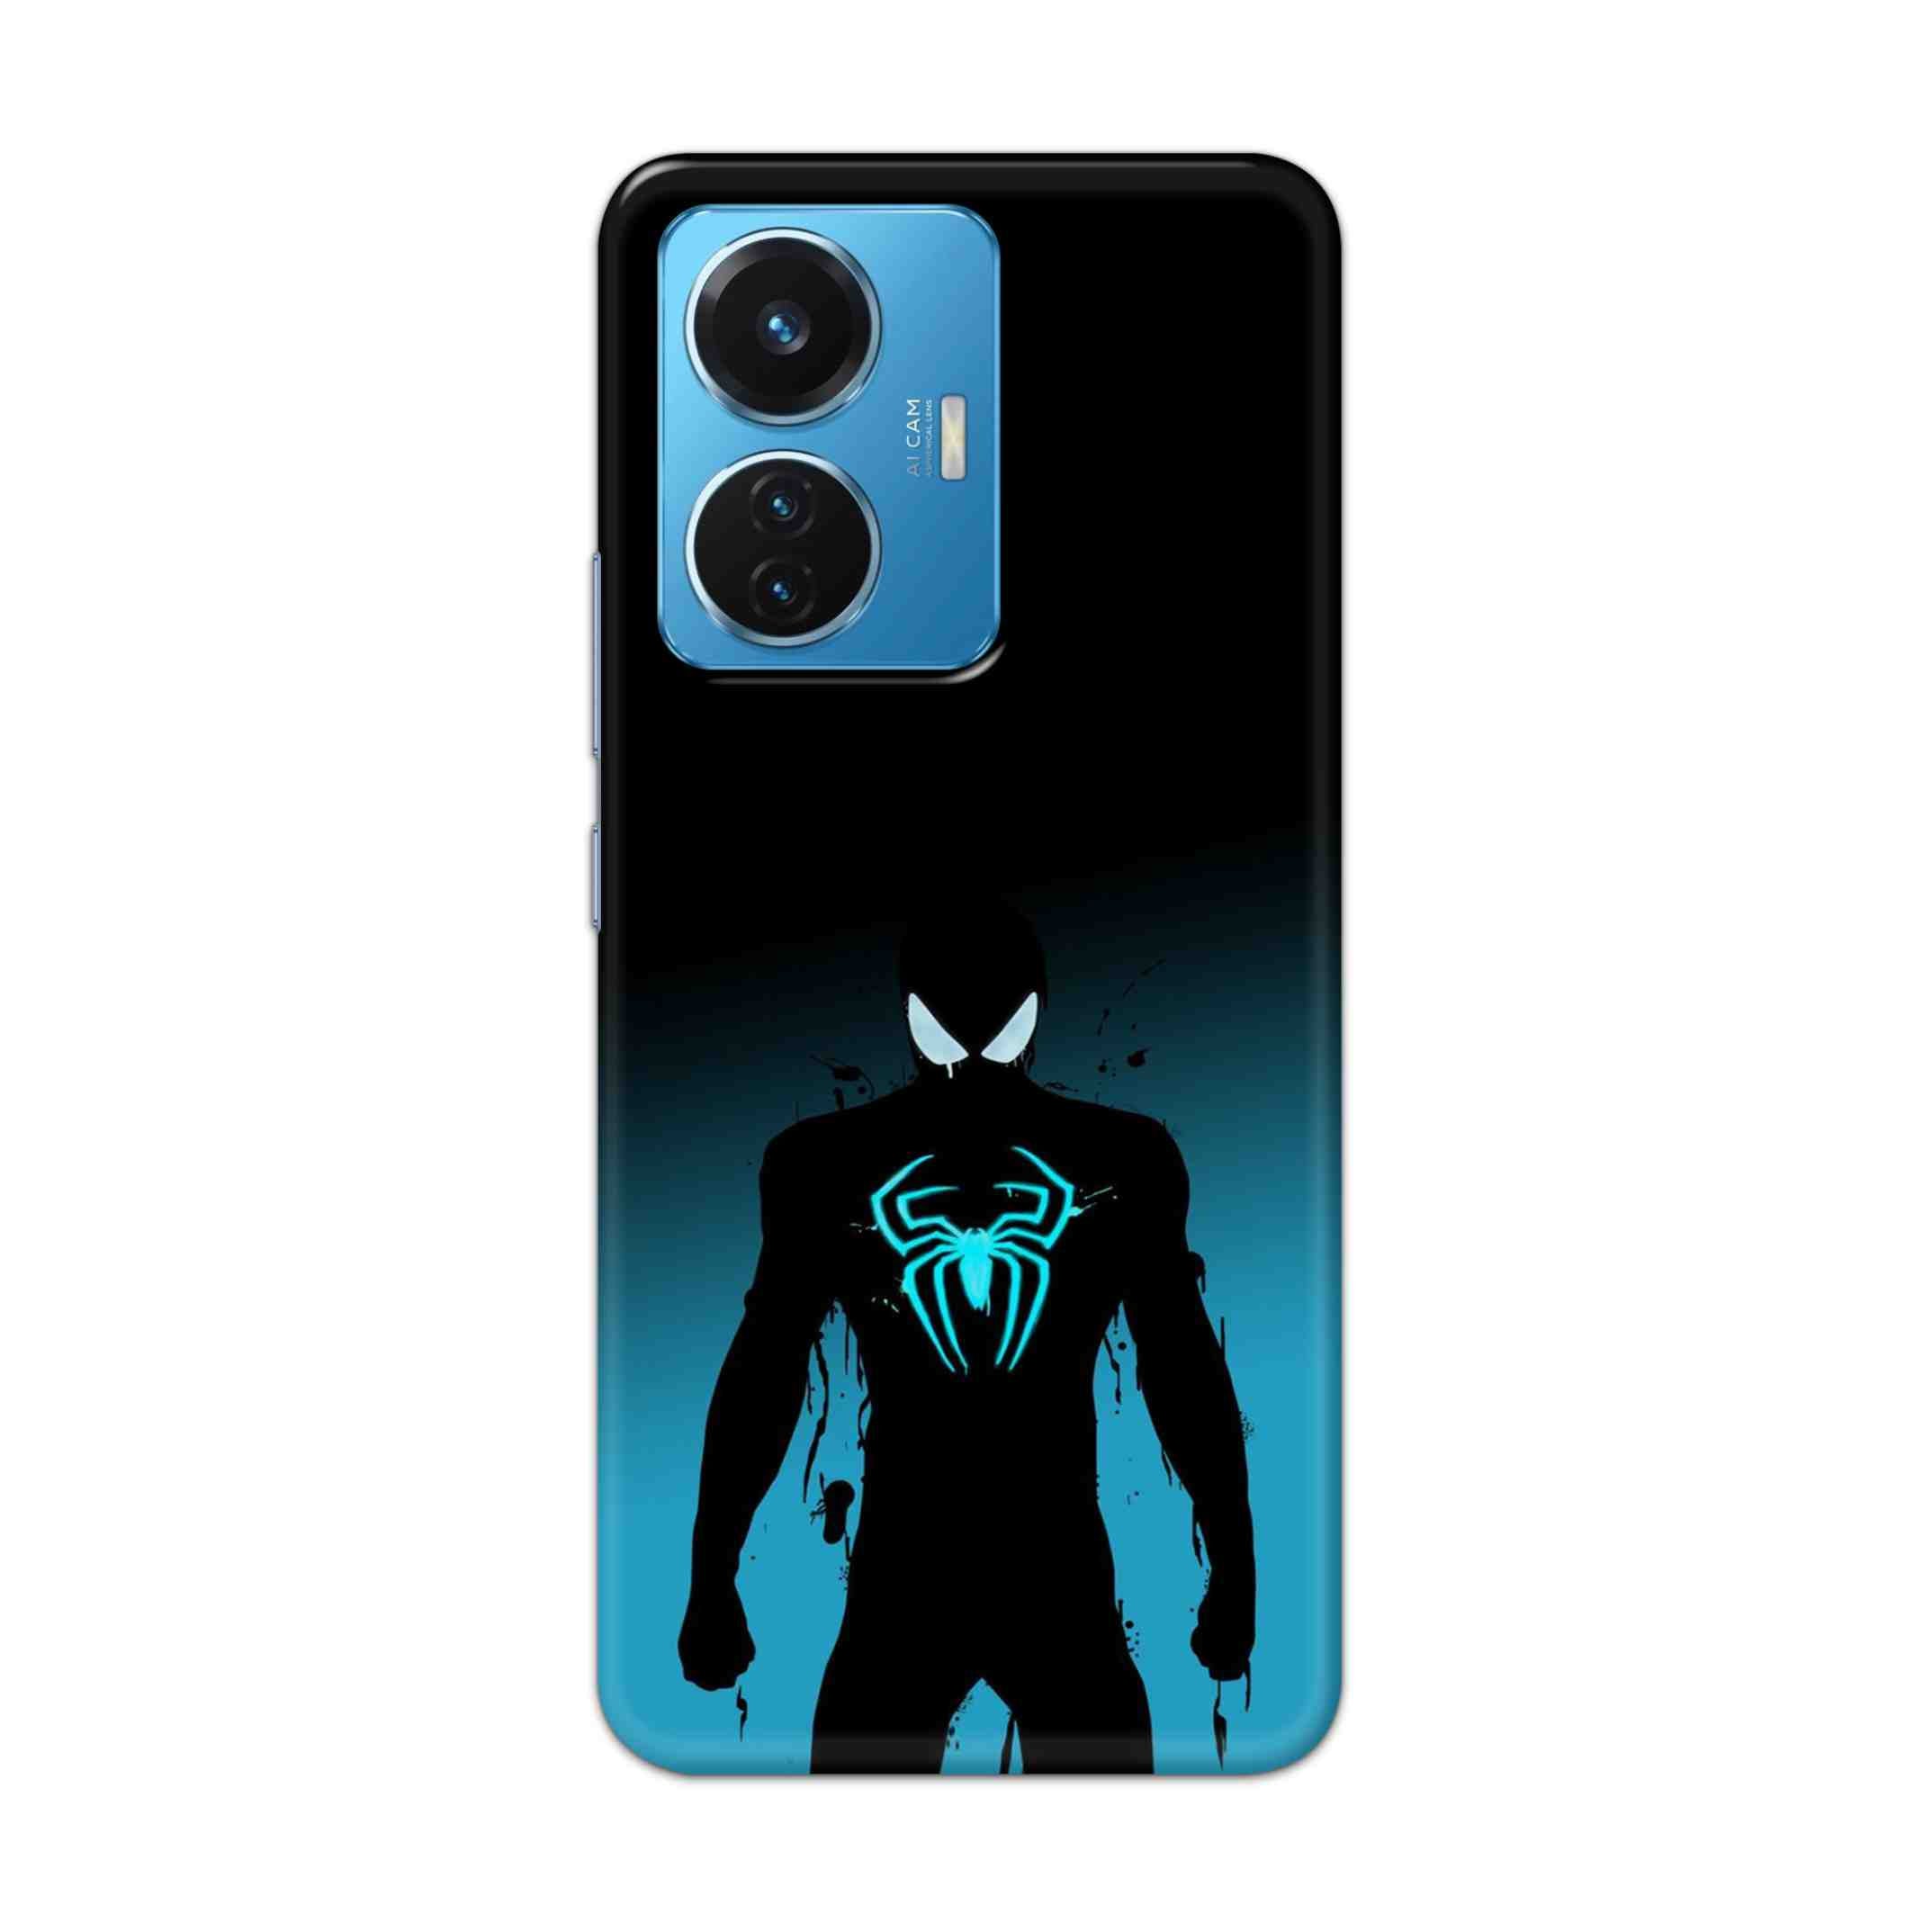 Buy Neon Spiderman Hard Back Mobile Phone Case Cover For Vivo T1 44W Online